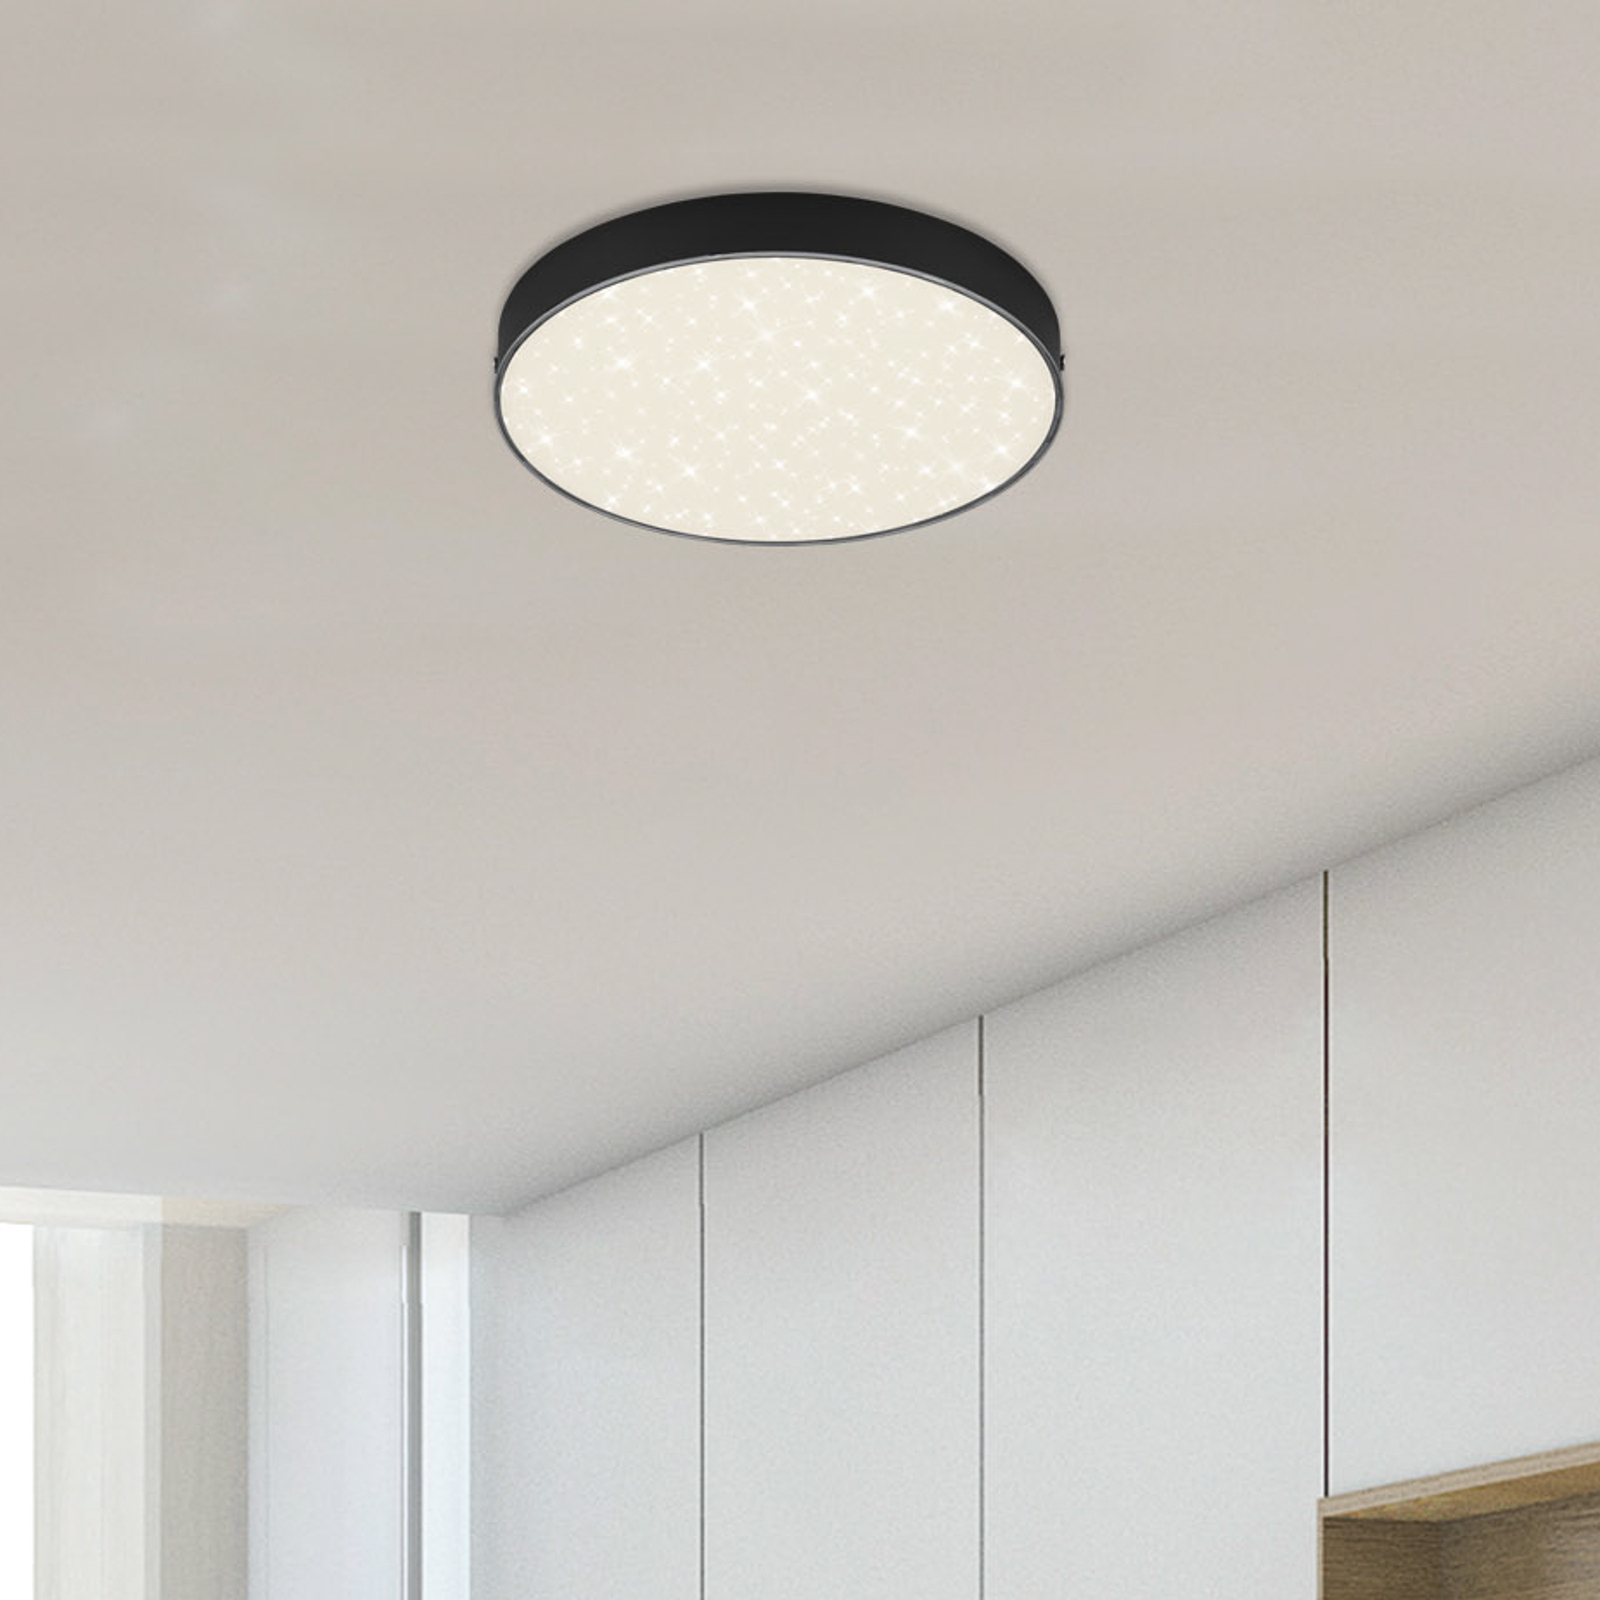 Flame Star LED ceiling light, Ø 21.2 cm, black